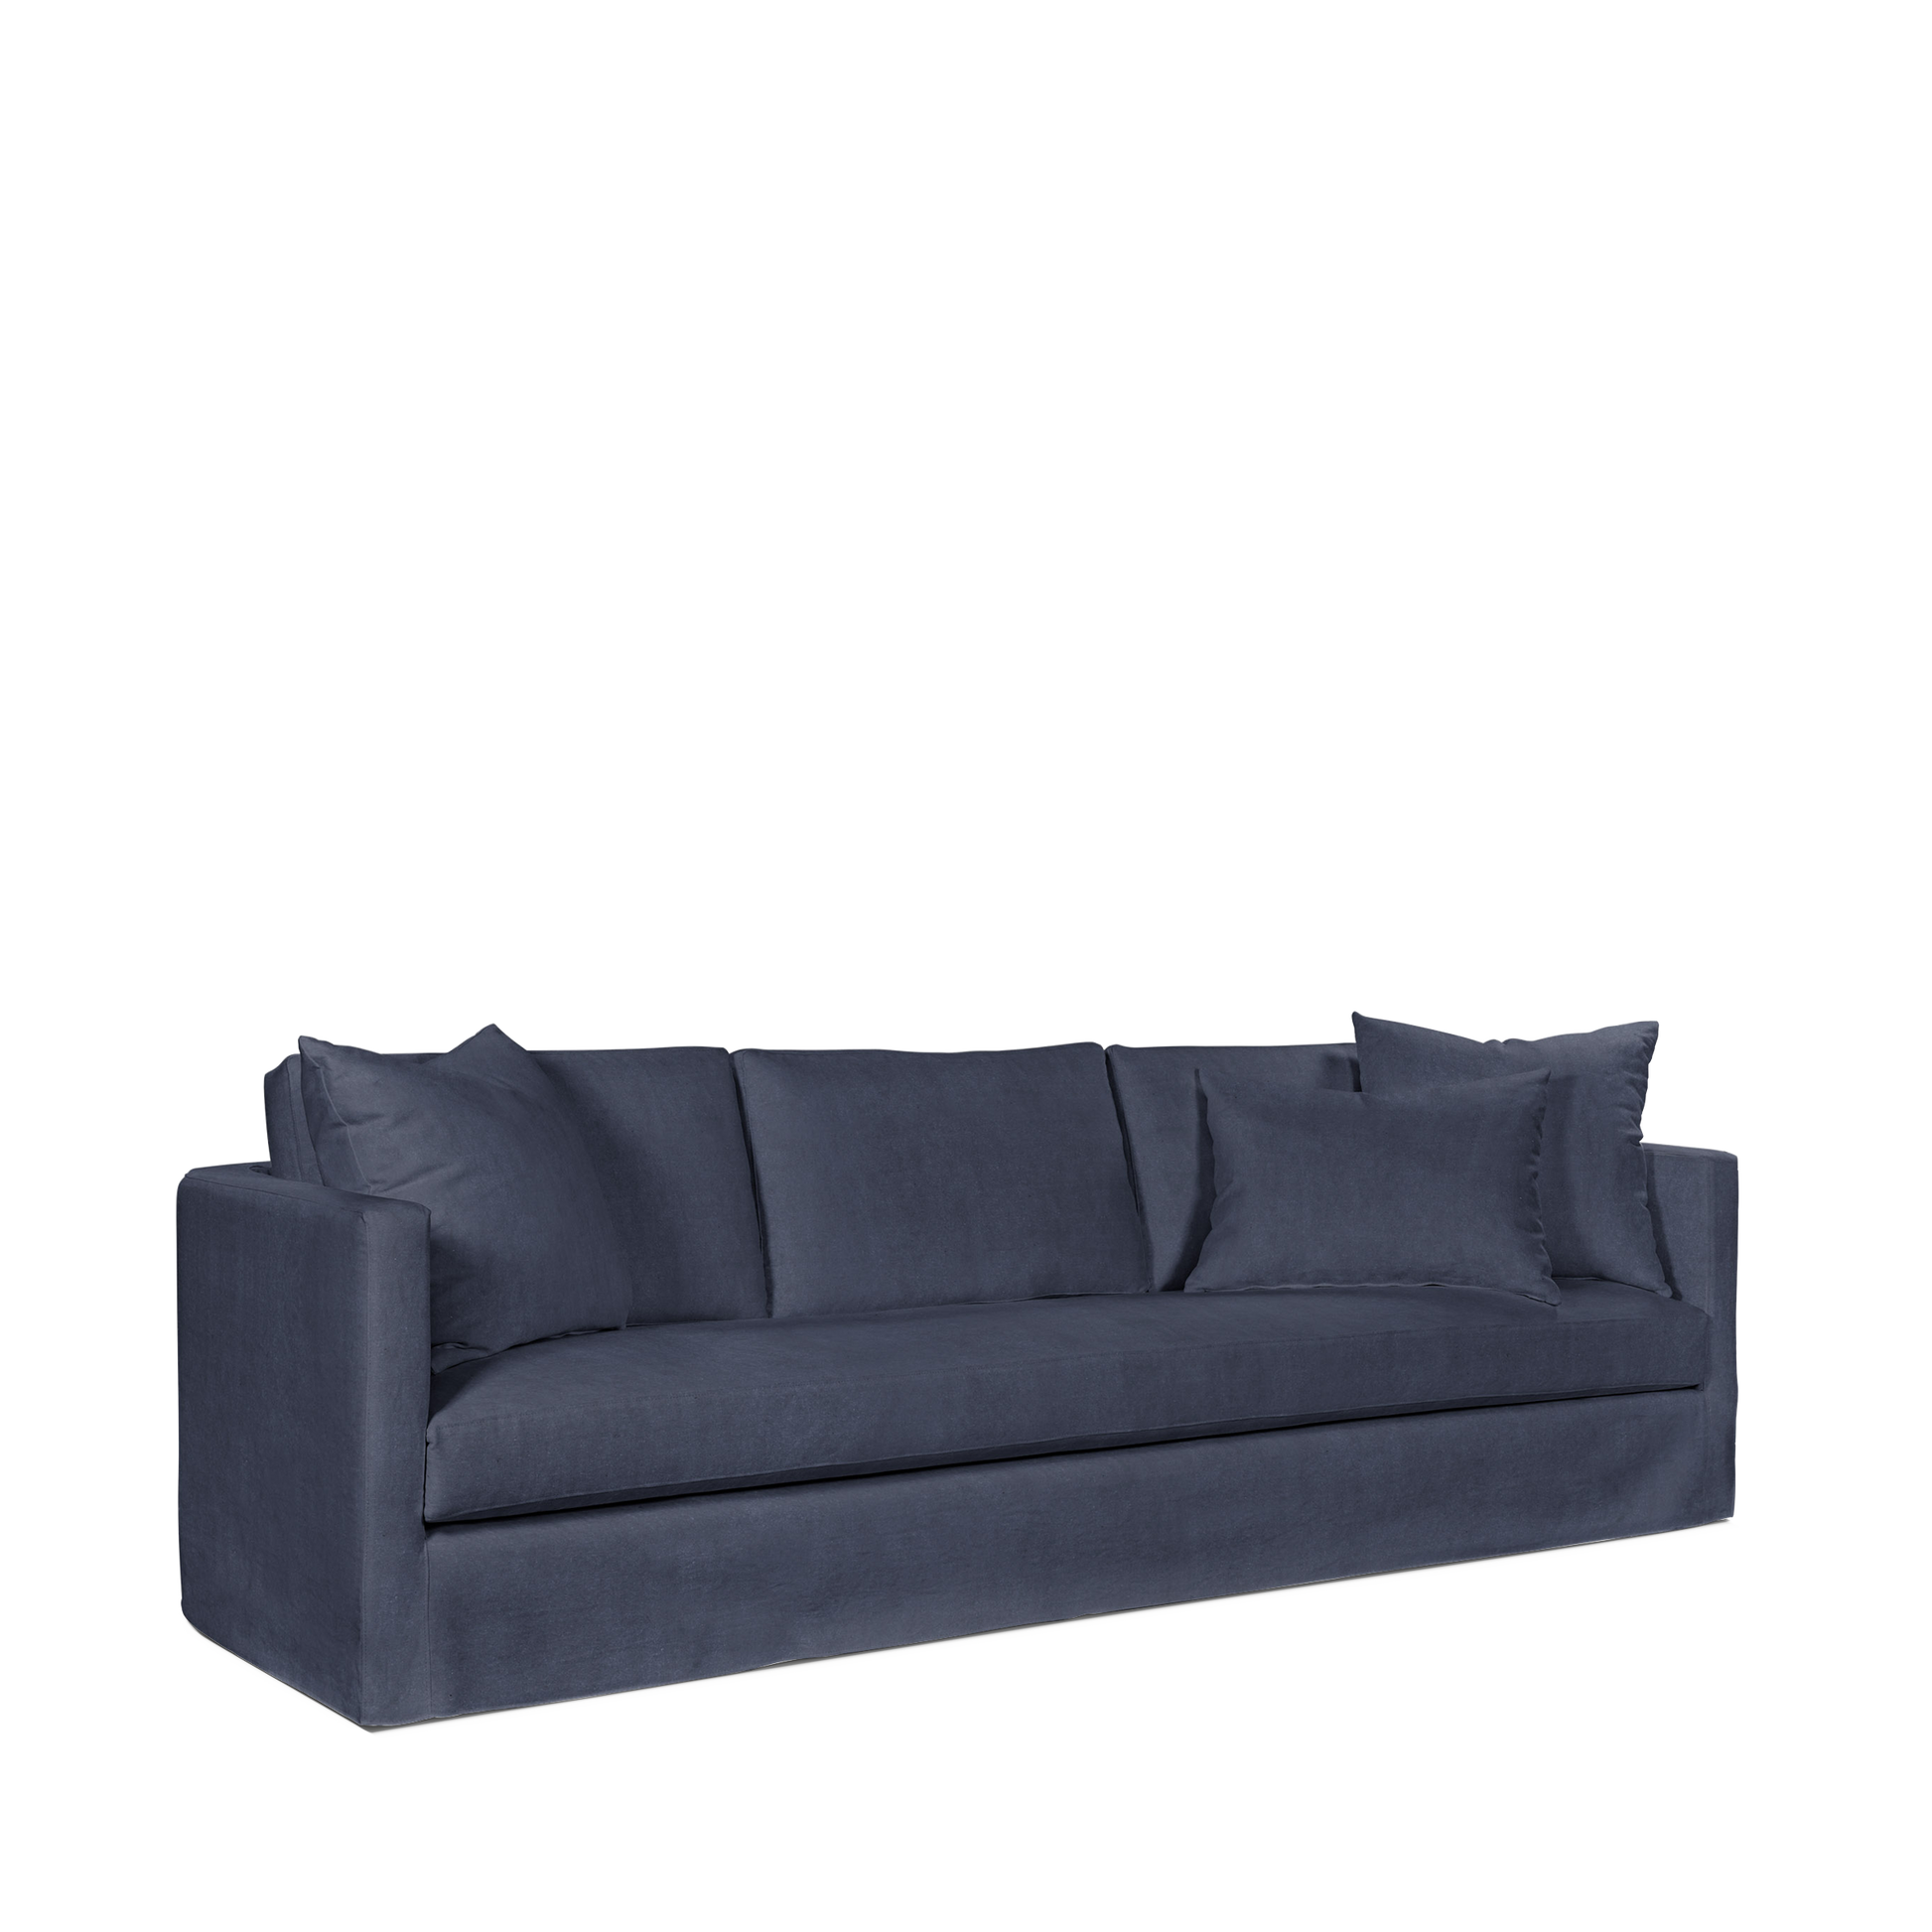 NIDO 4-seater sofa with London dark blue textile 